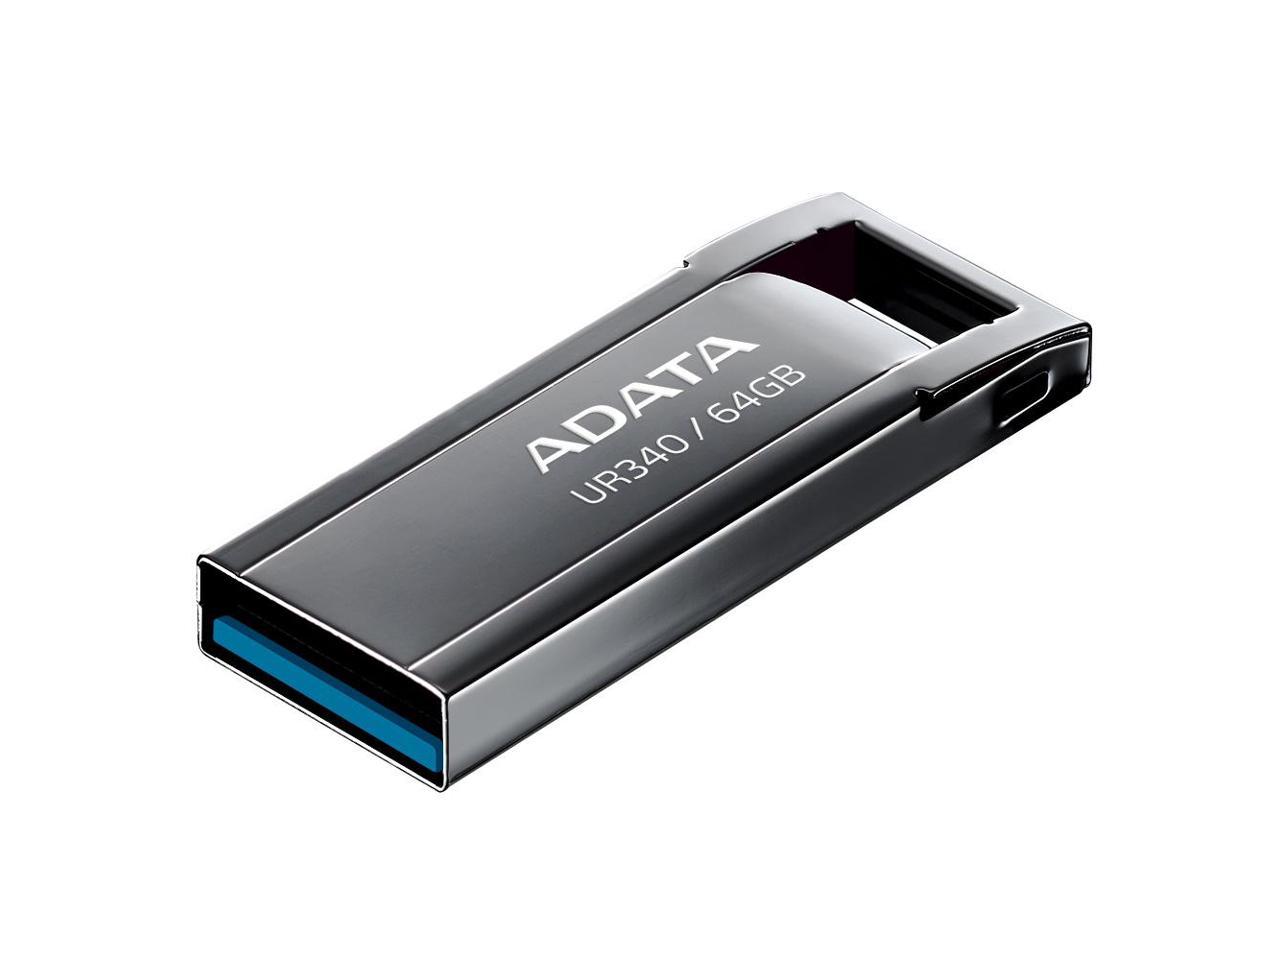 64GB AData Royal UR340 Ultra-Compact USB3.0 (USB3.2) Flash Drive